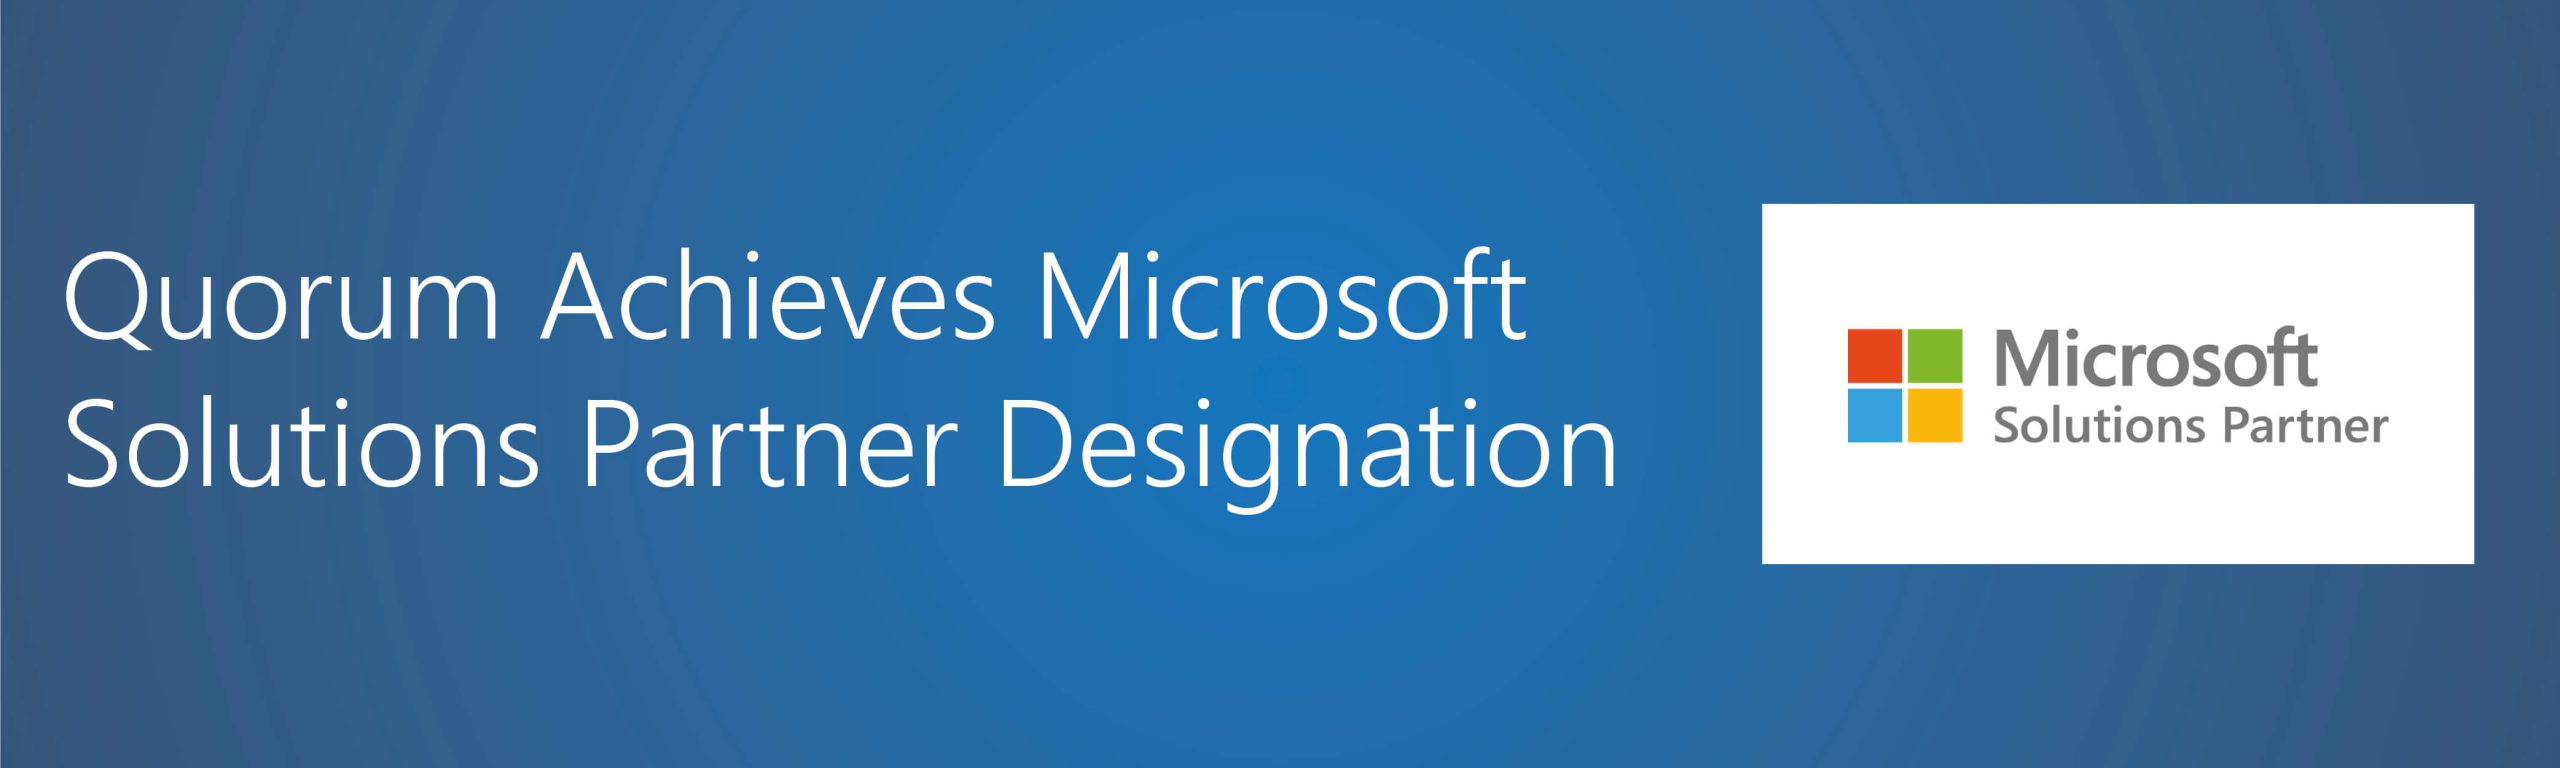 Microsoft Solutions Partner Designation Banner